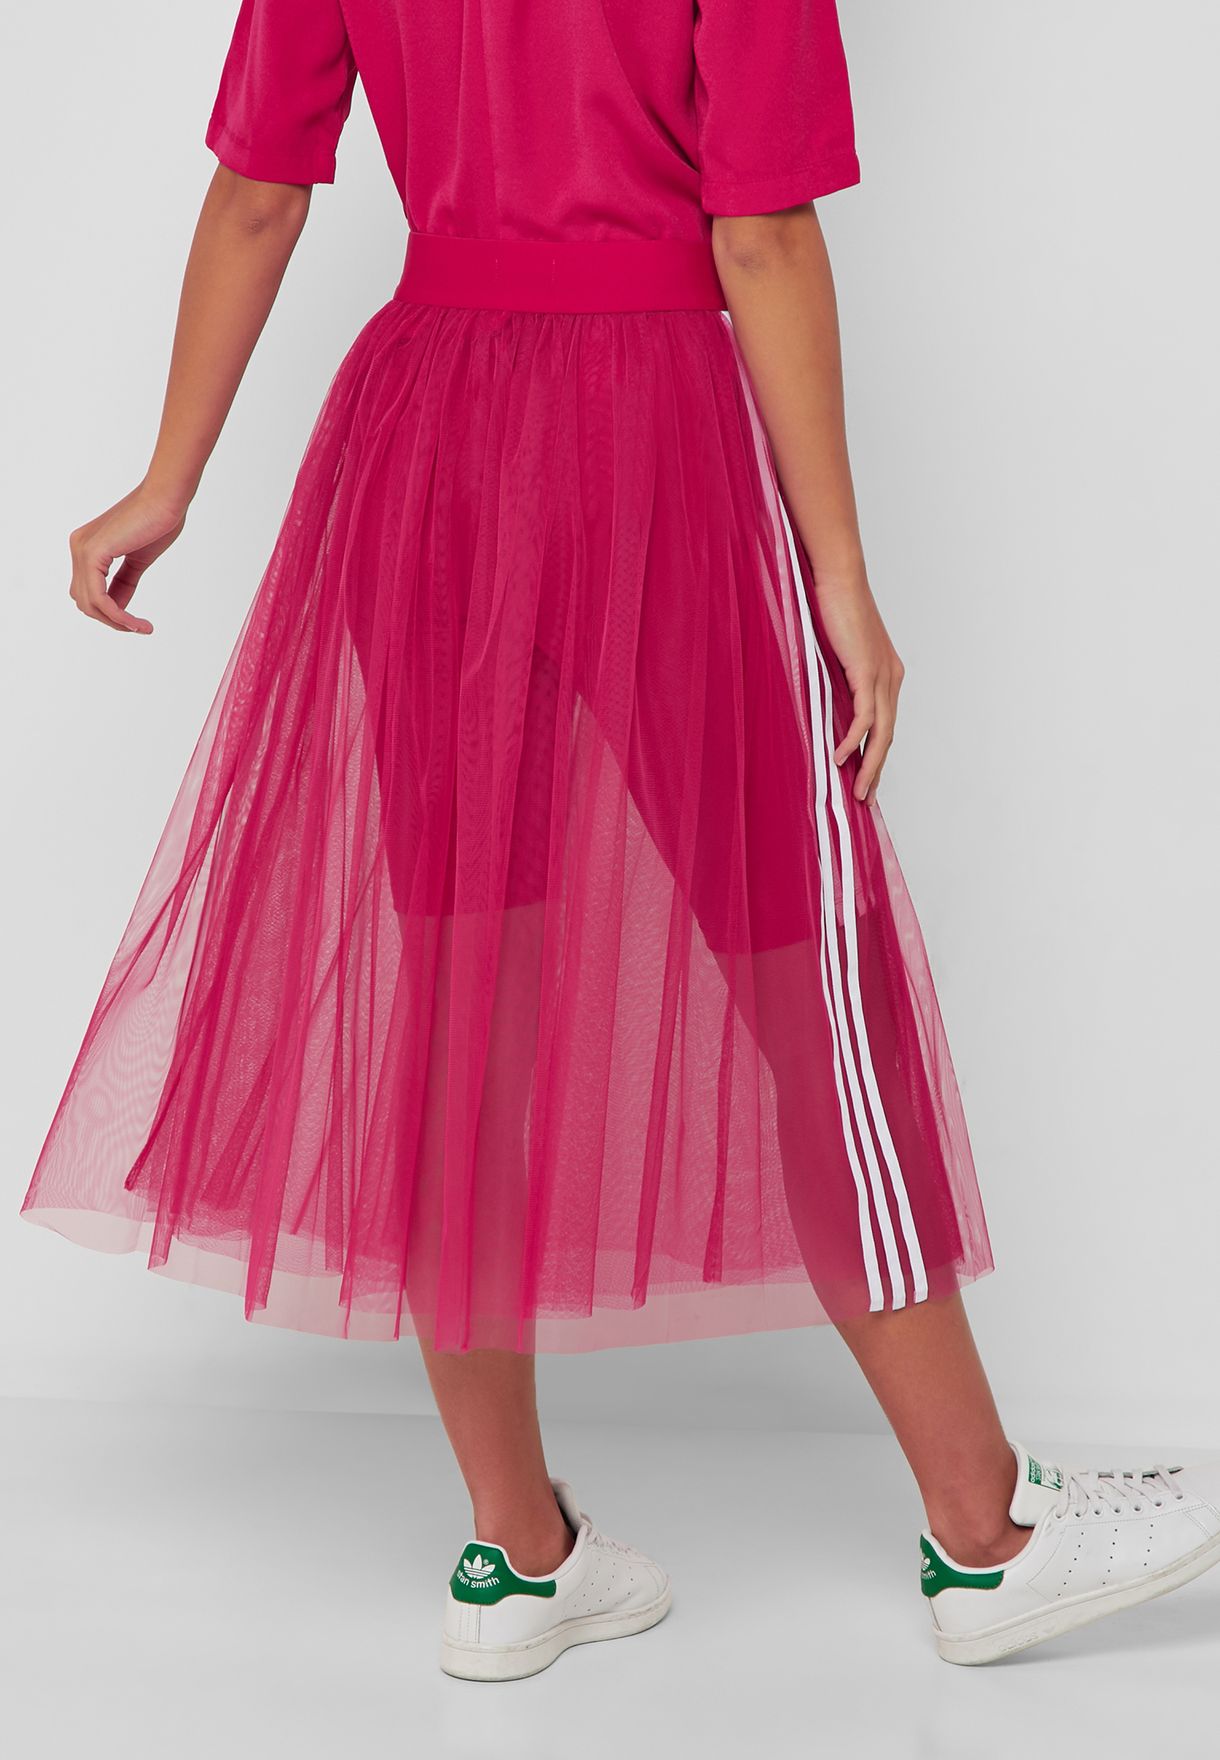 Buy adidas Originals pink Tulle Skirt 